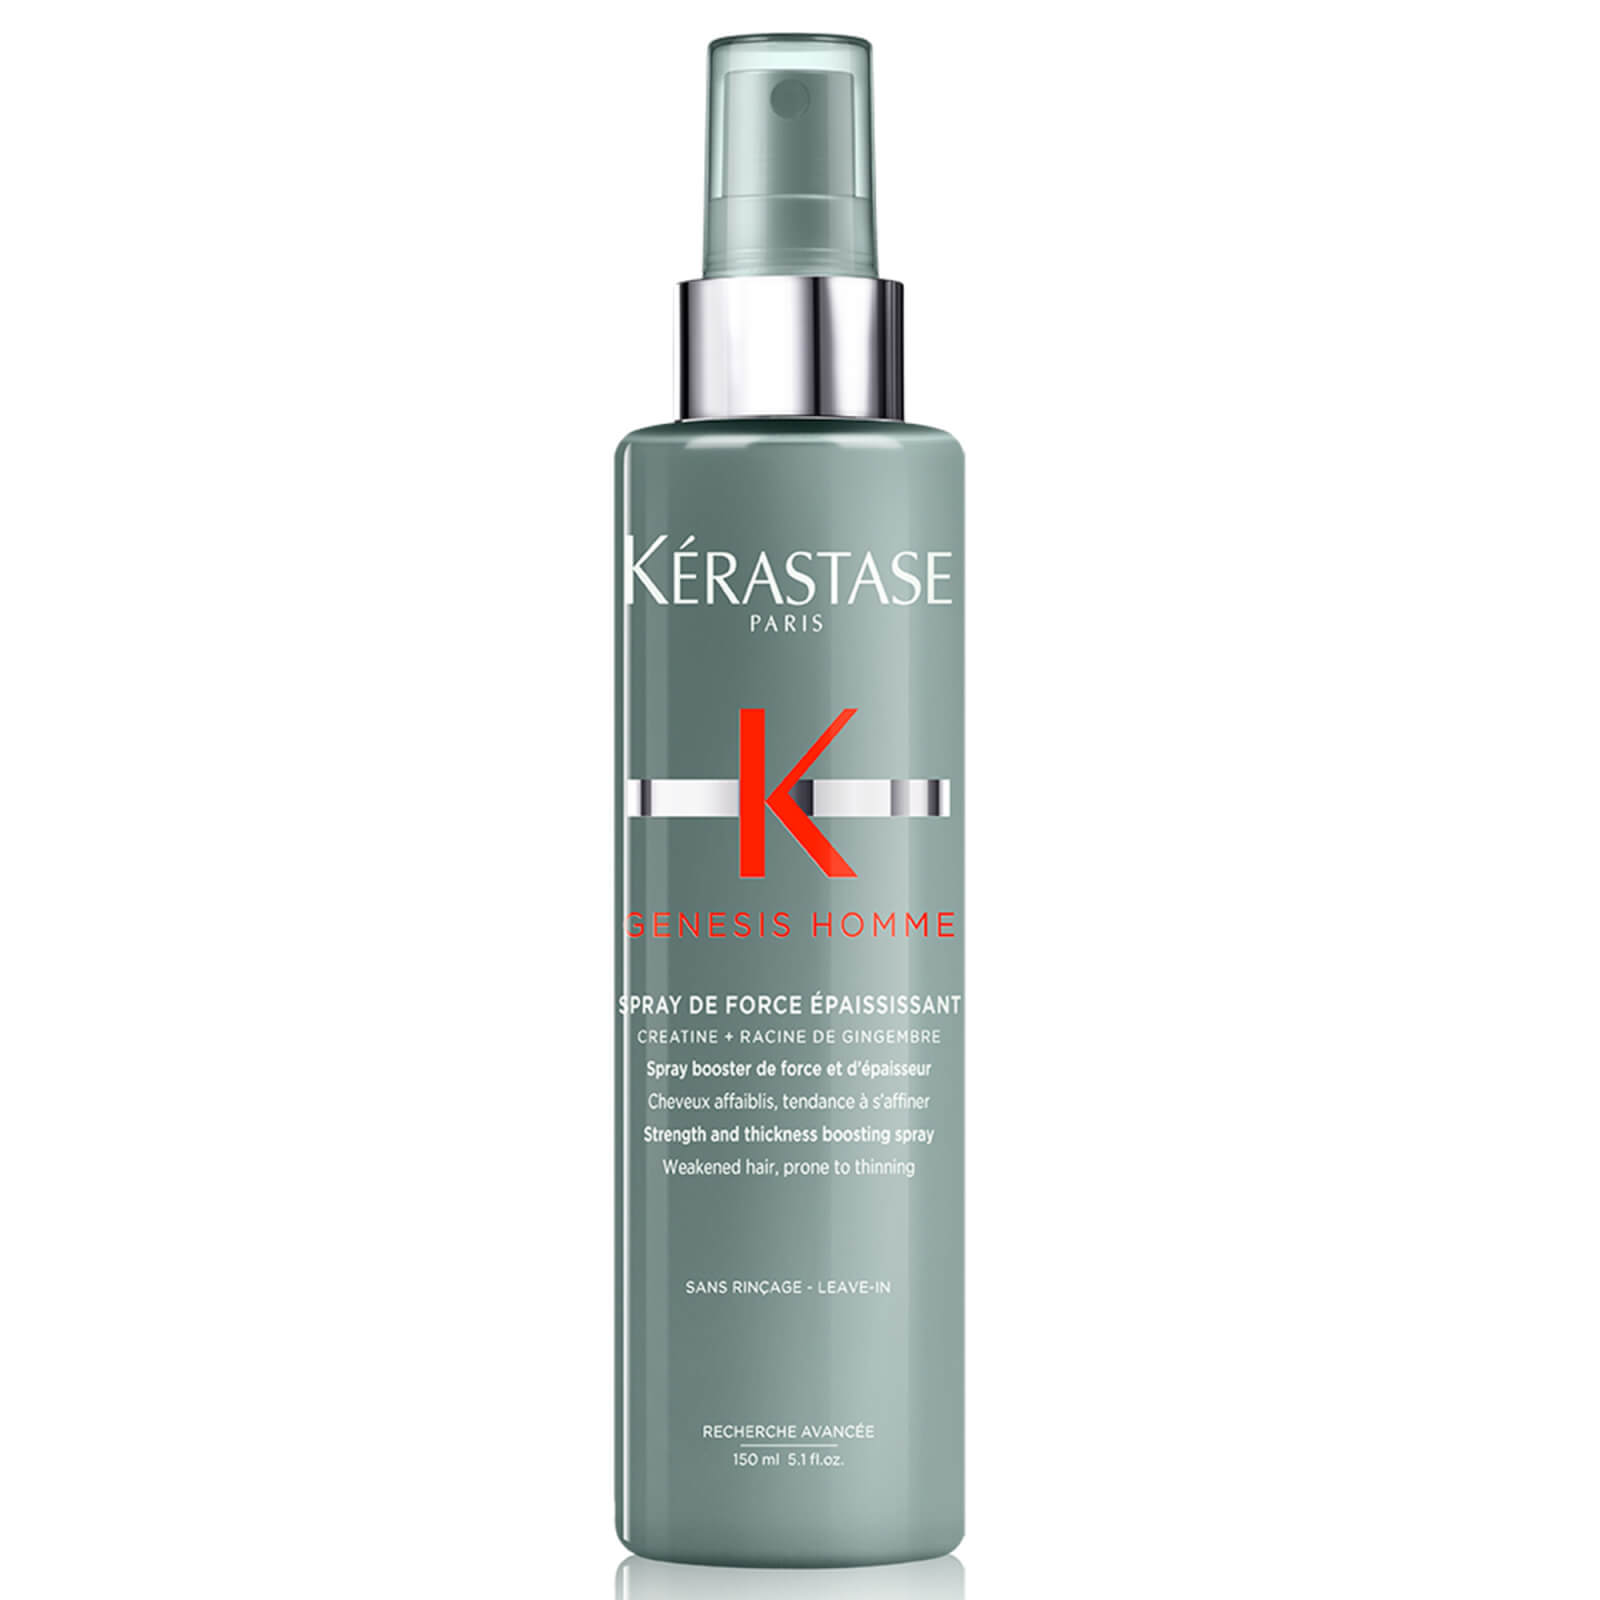 Kérastase Genesis Homme Strength and Thickness Boosting Spray 150ml von Kerastase